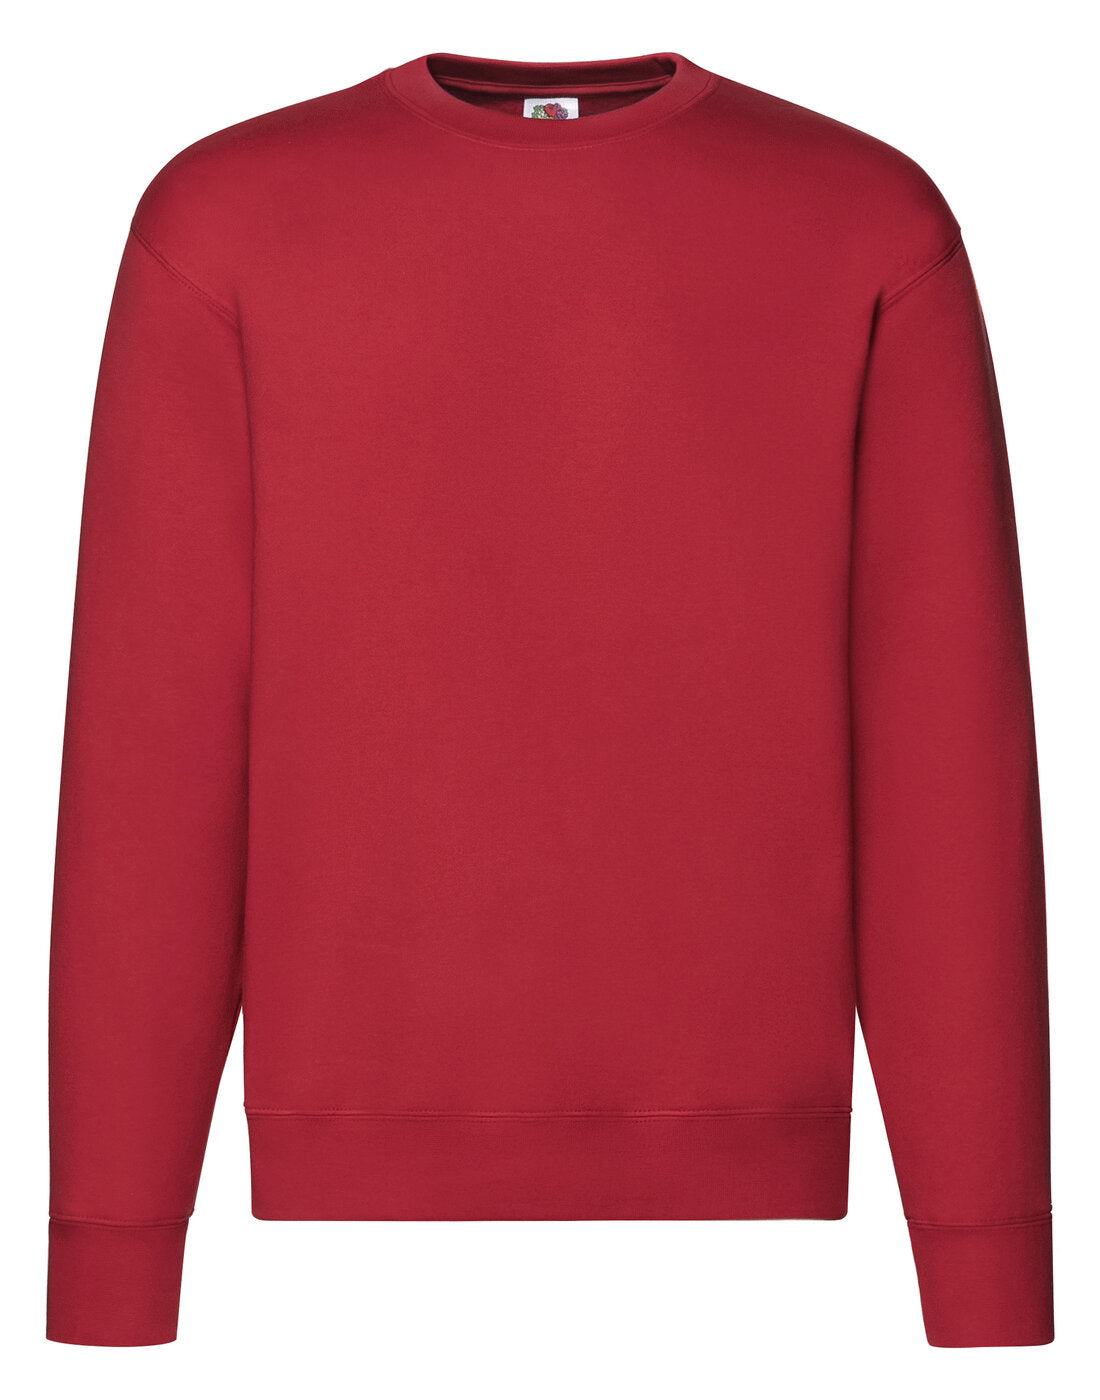 Fruit of the Loom Premium 70/30 Unisex Sweatshirt - Red